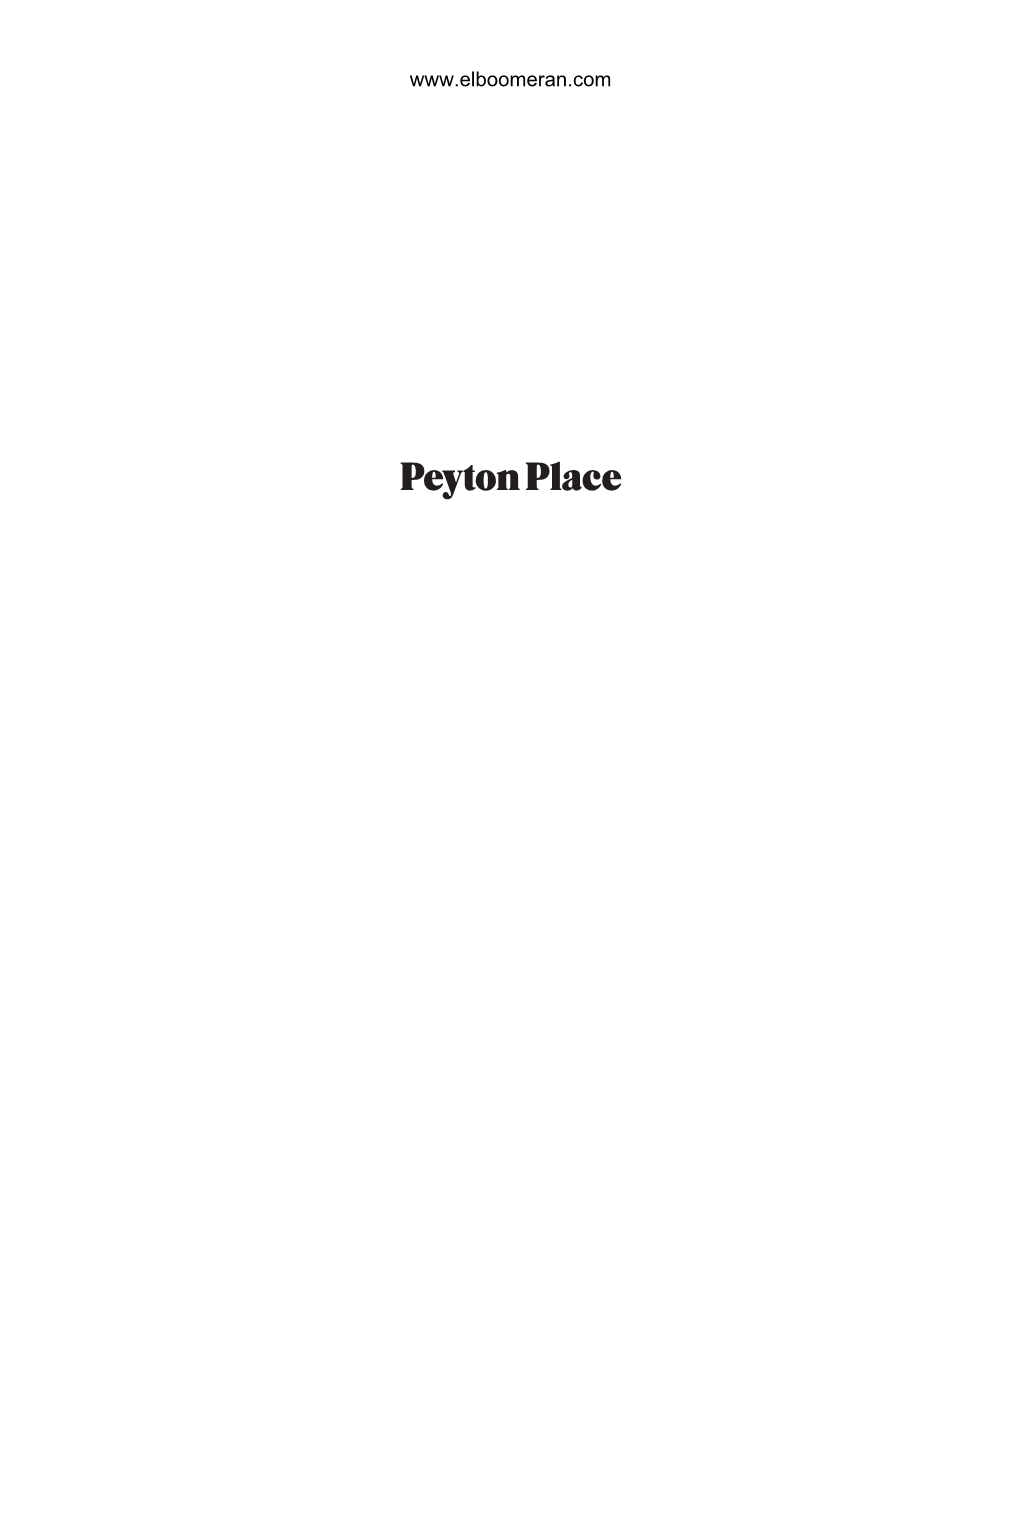 Peyton Place Def2.Indd